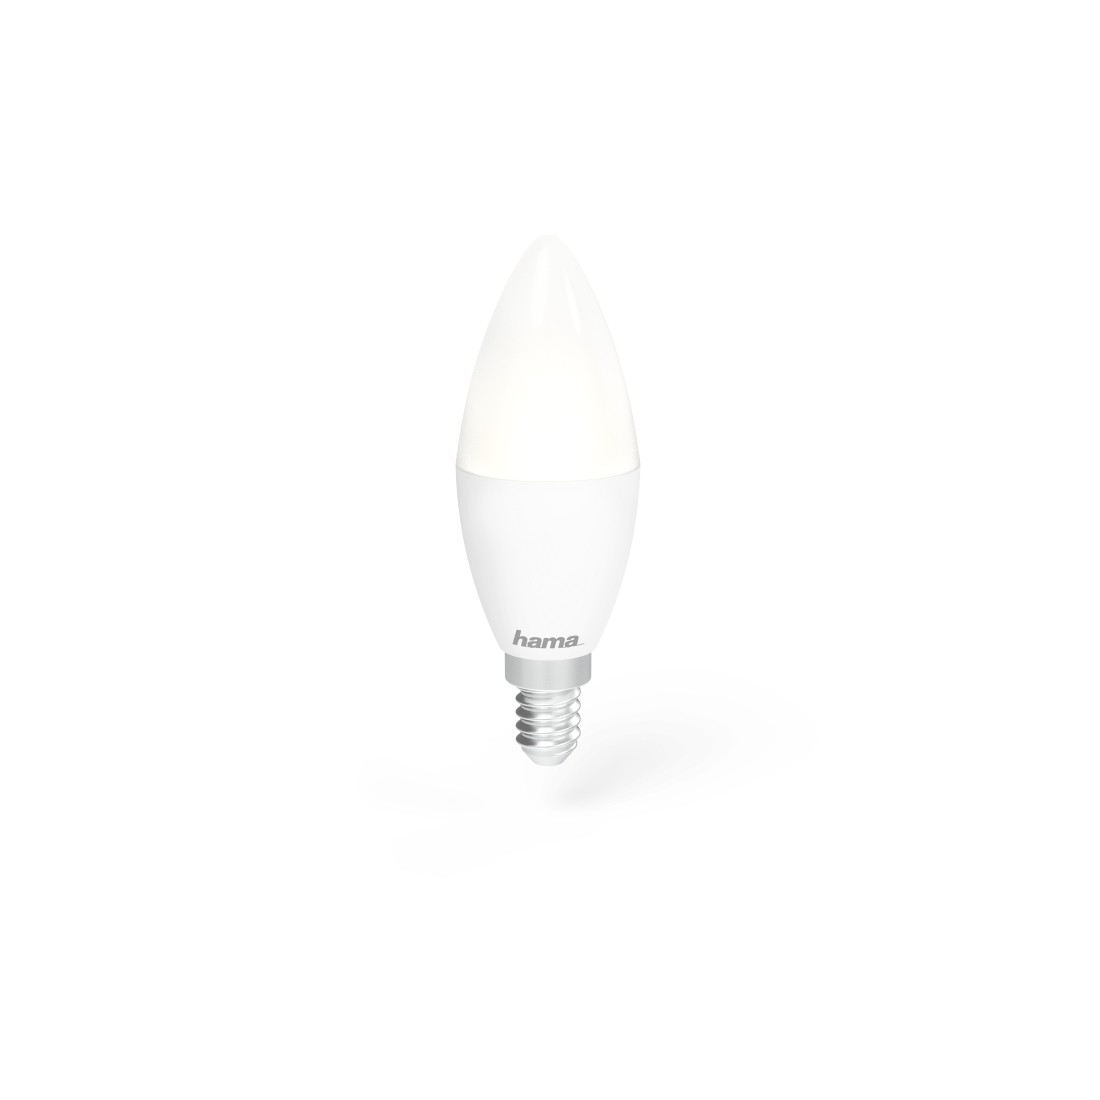 Hama 00176559 soluzione di illuminazione intelligente Lampadina intelligente 4,5 W Bianco...